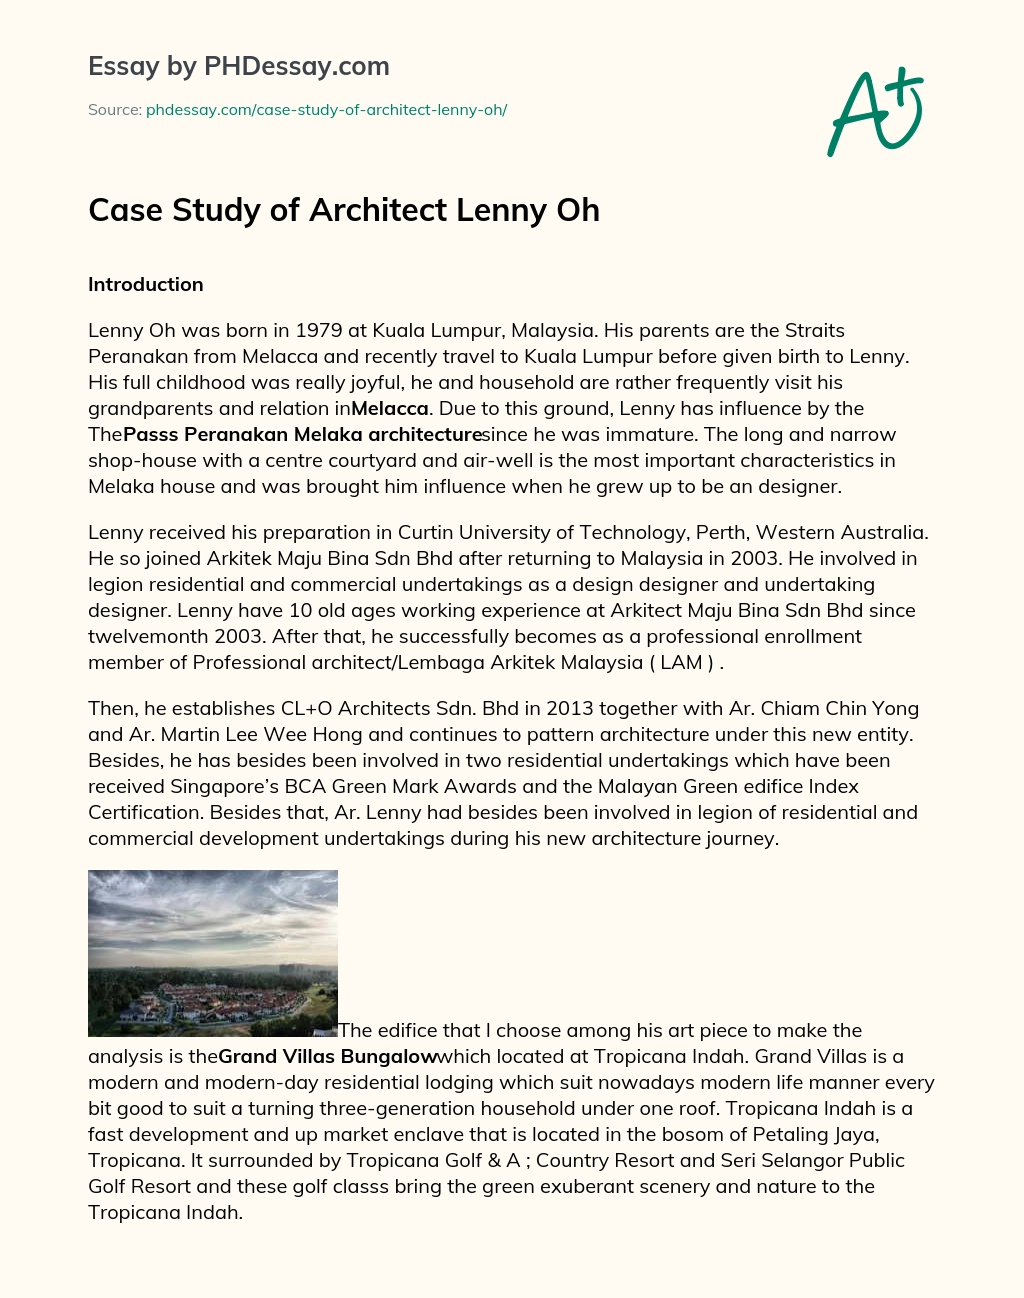 Case Study of Architect Lenny Oh essay